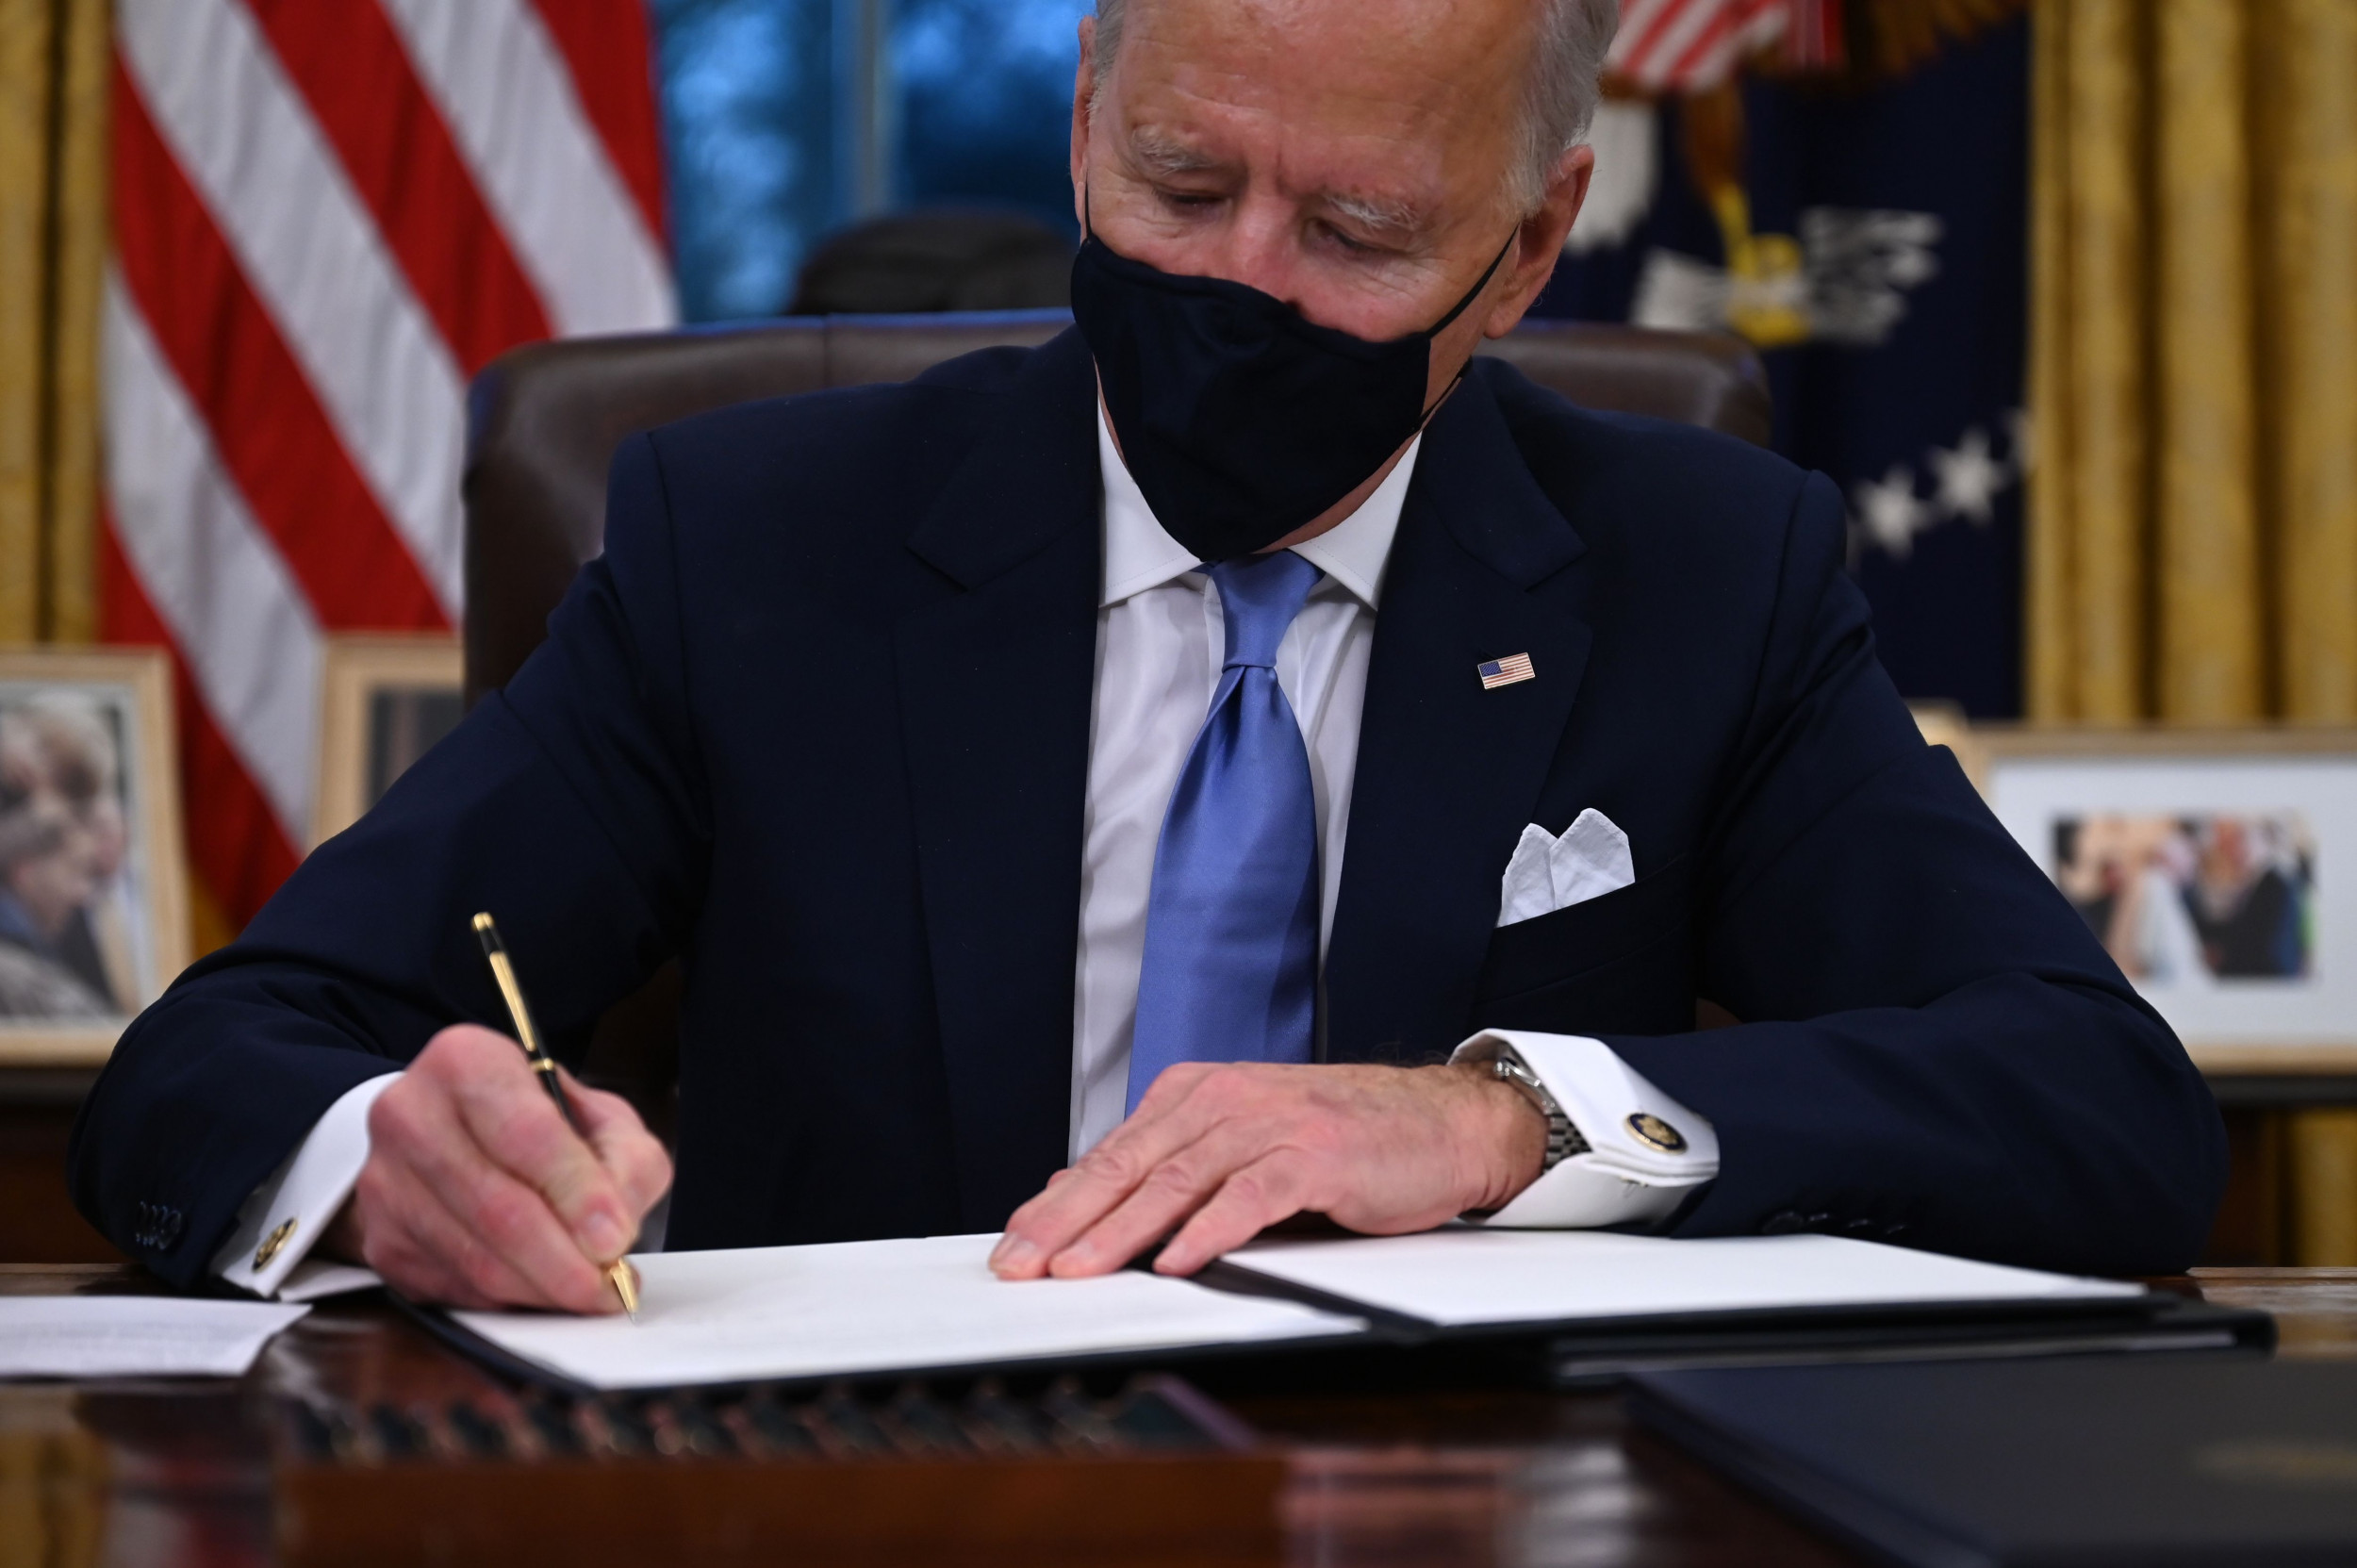 Joe Biden’s visa decision on Donald Trump’s ‘Muslim ban’ enrages progressives